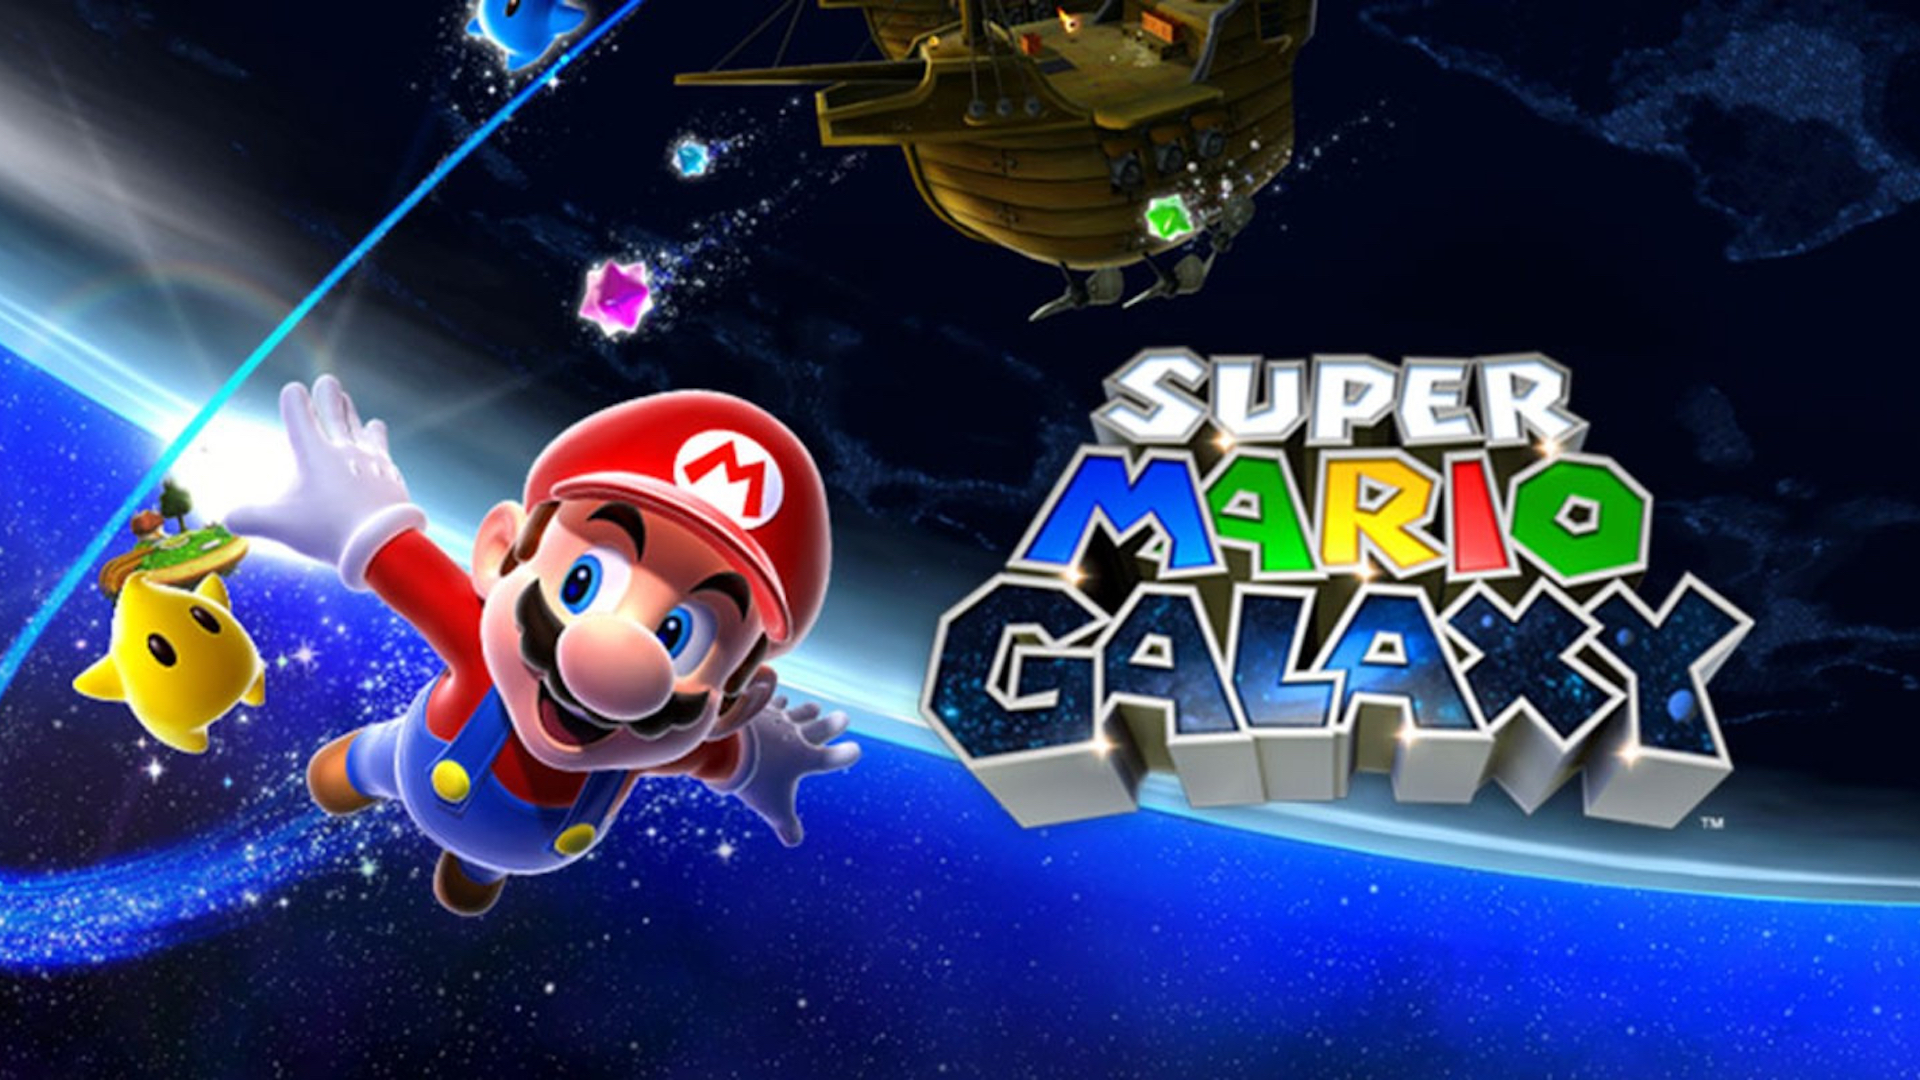 Super Mario 3d தொகுப்பு இந்த வாரம் அறிவிக்கப்படும் – வதந்தி